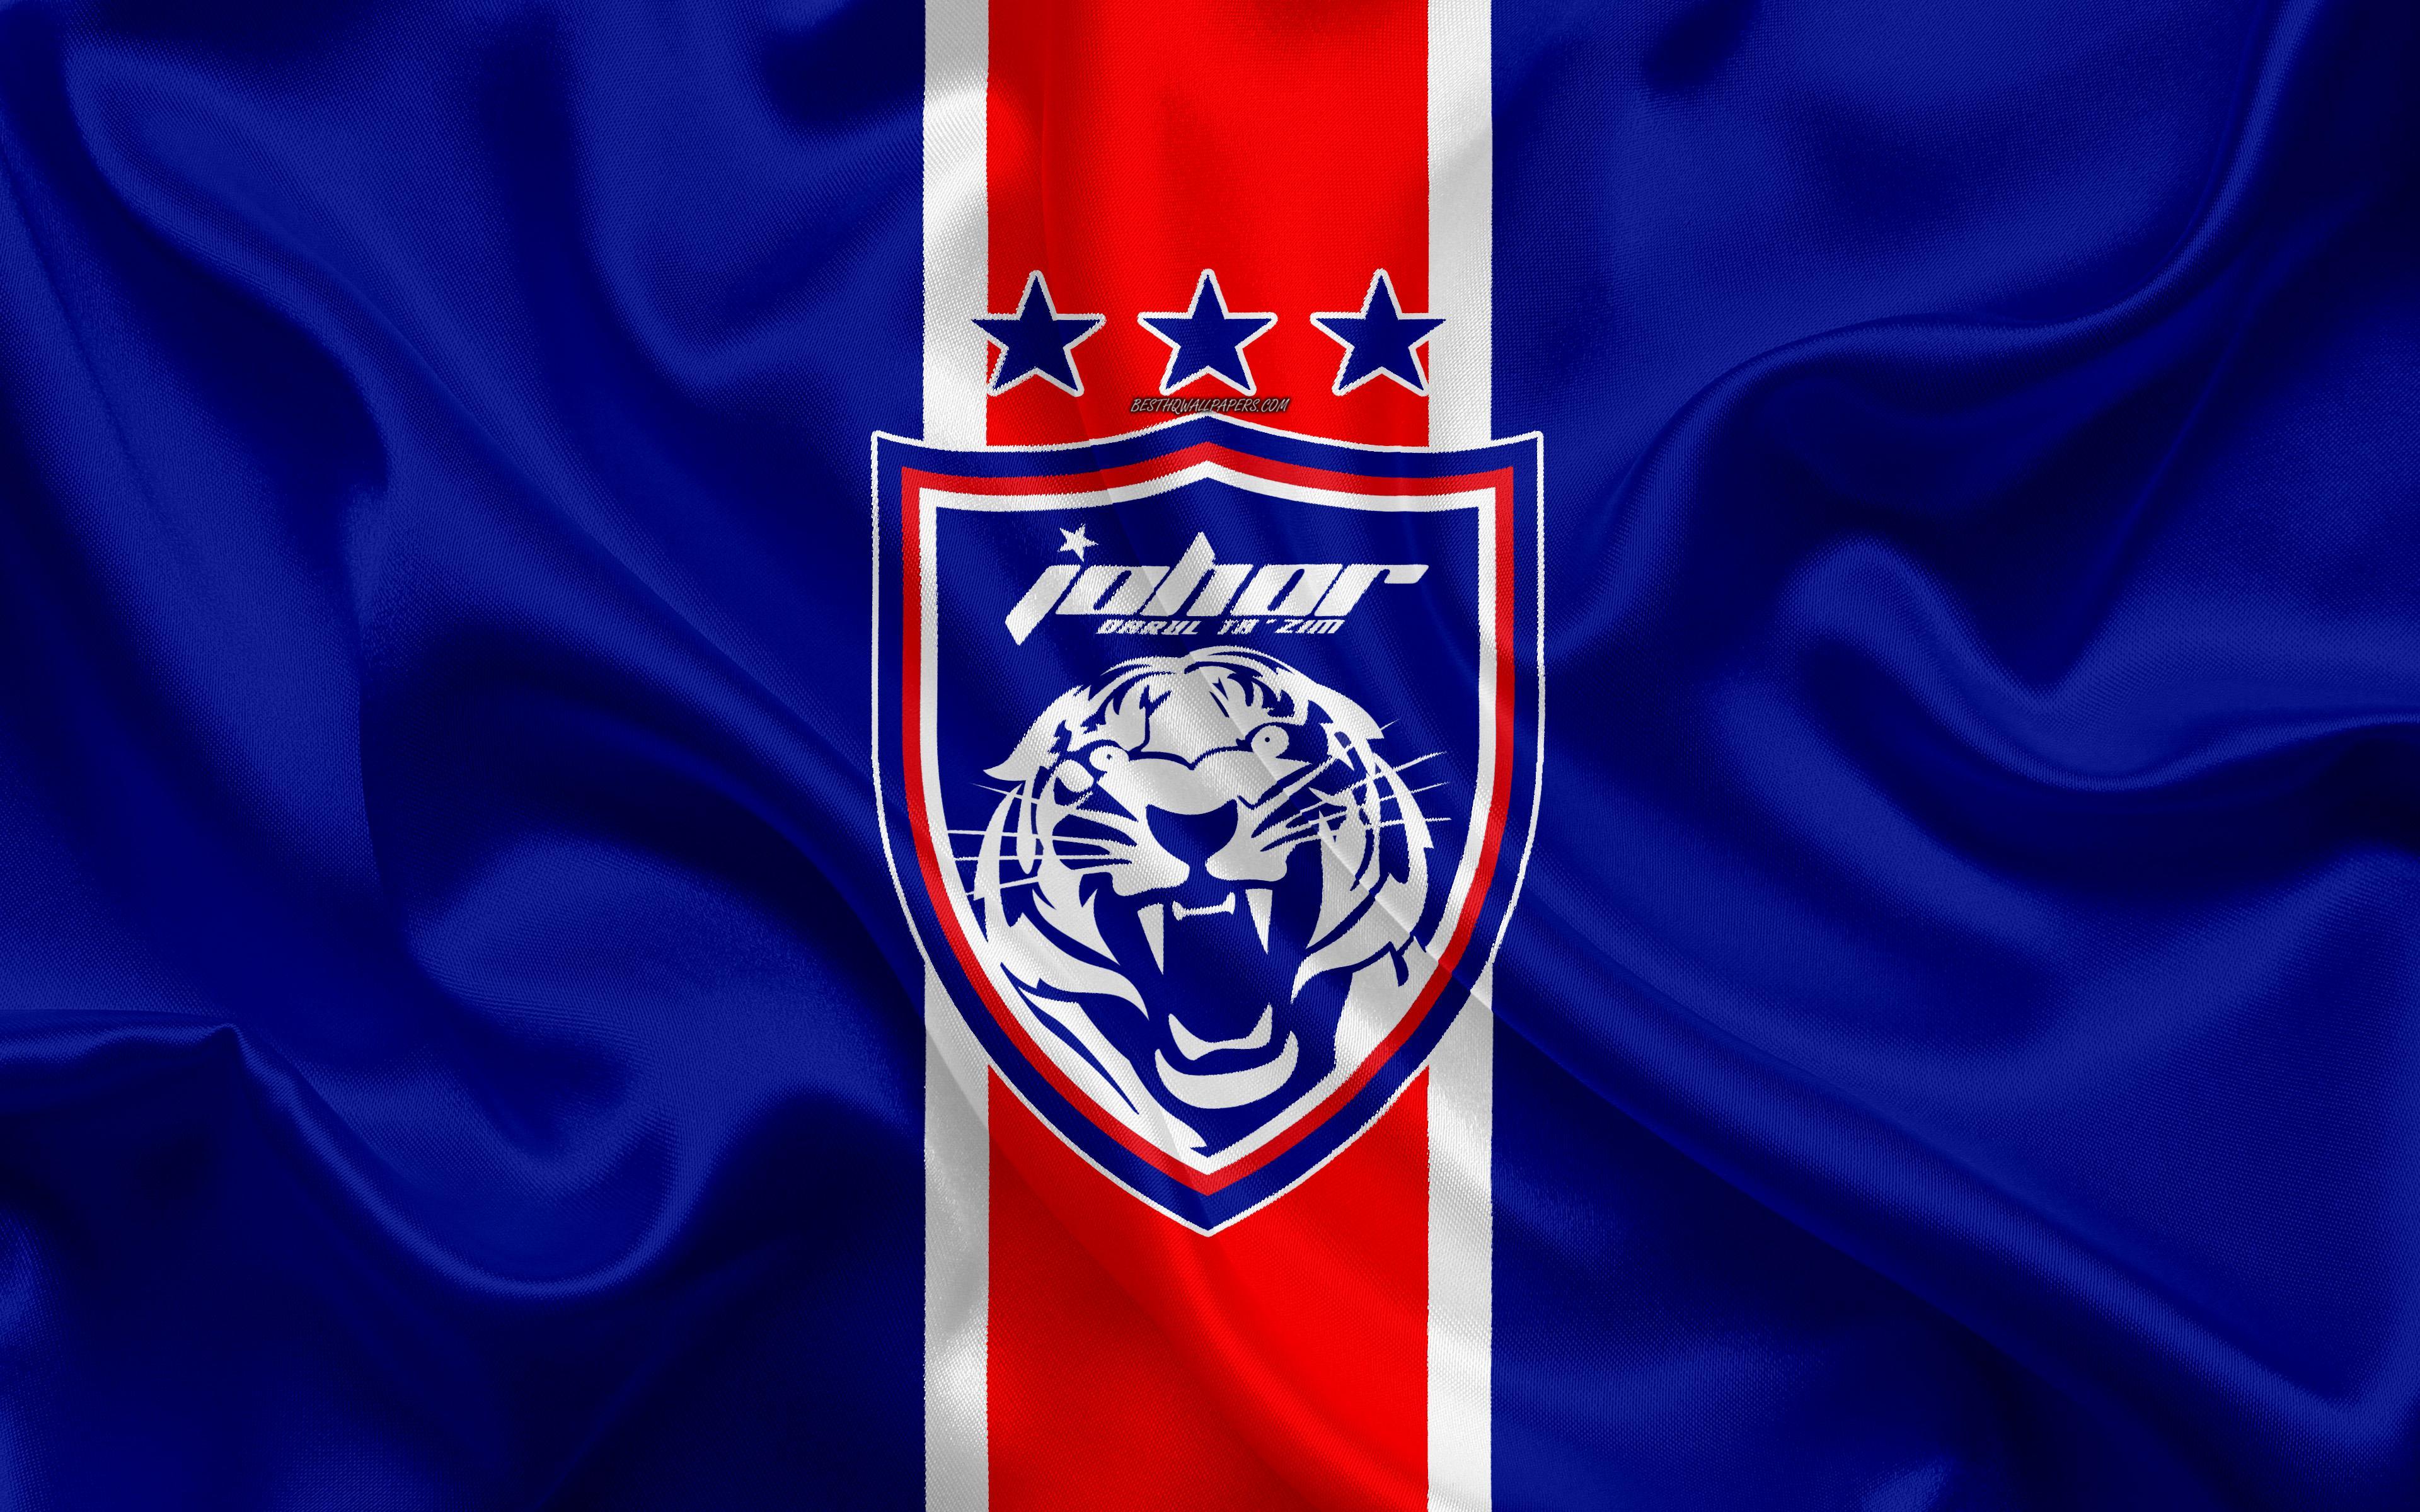 Download wallpaper Johor Darul Tazim FC, 4k, logo, silk texture